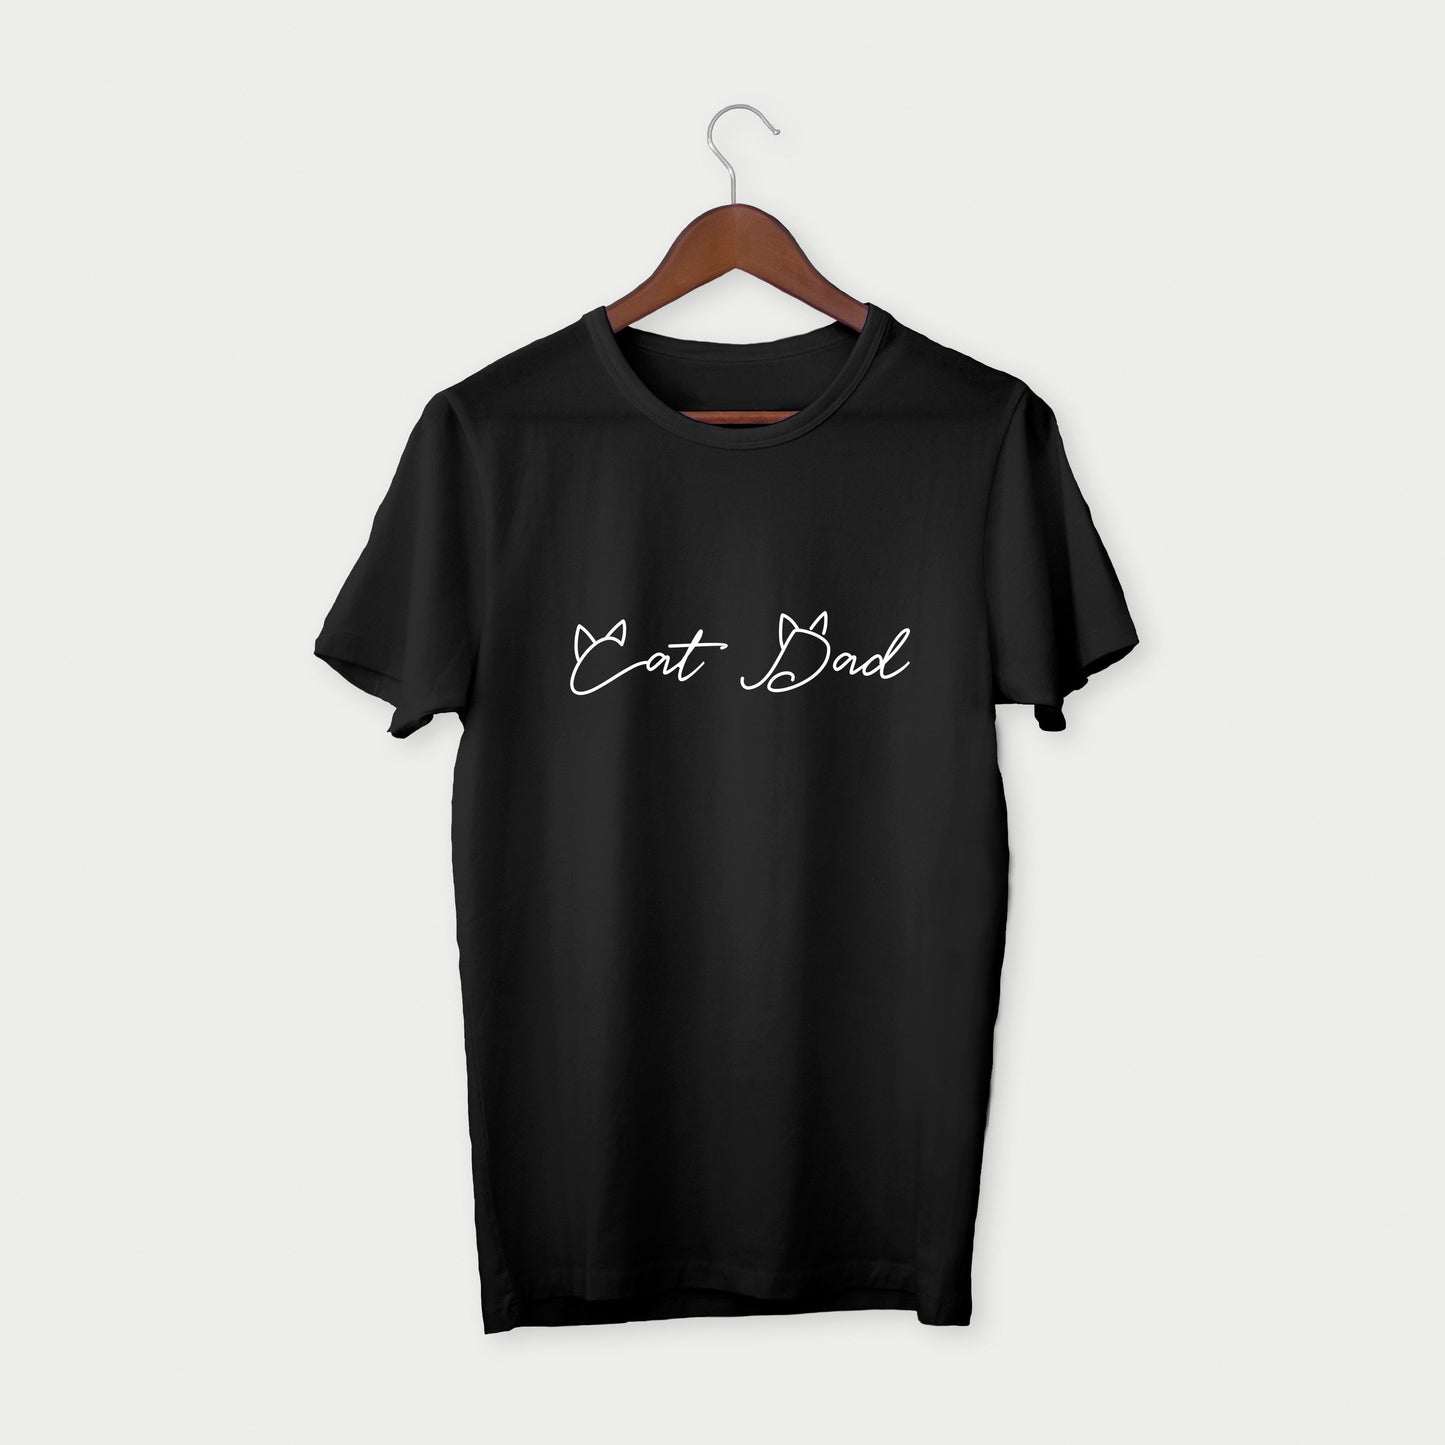 "Cat Dad" T-shirt